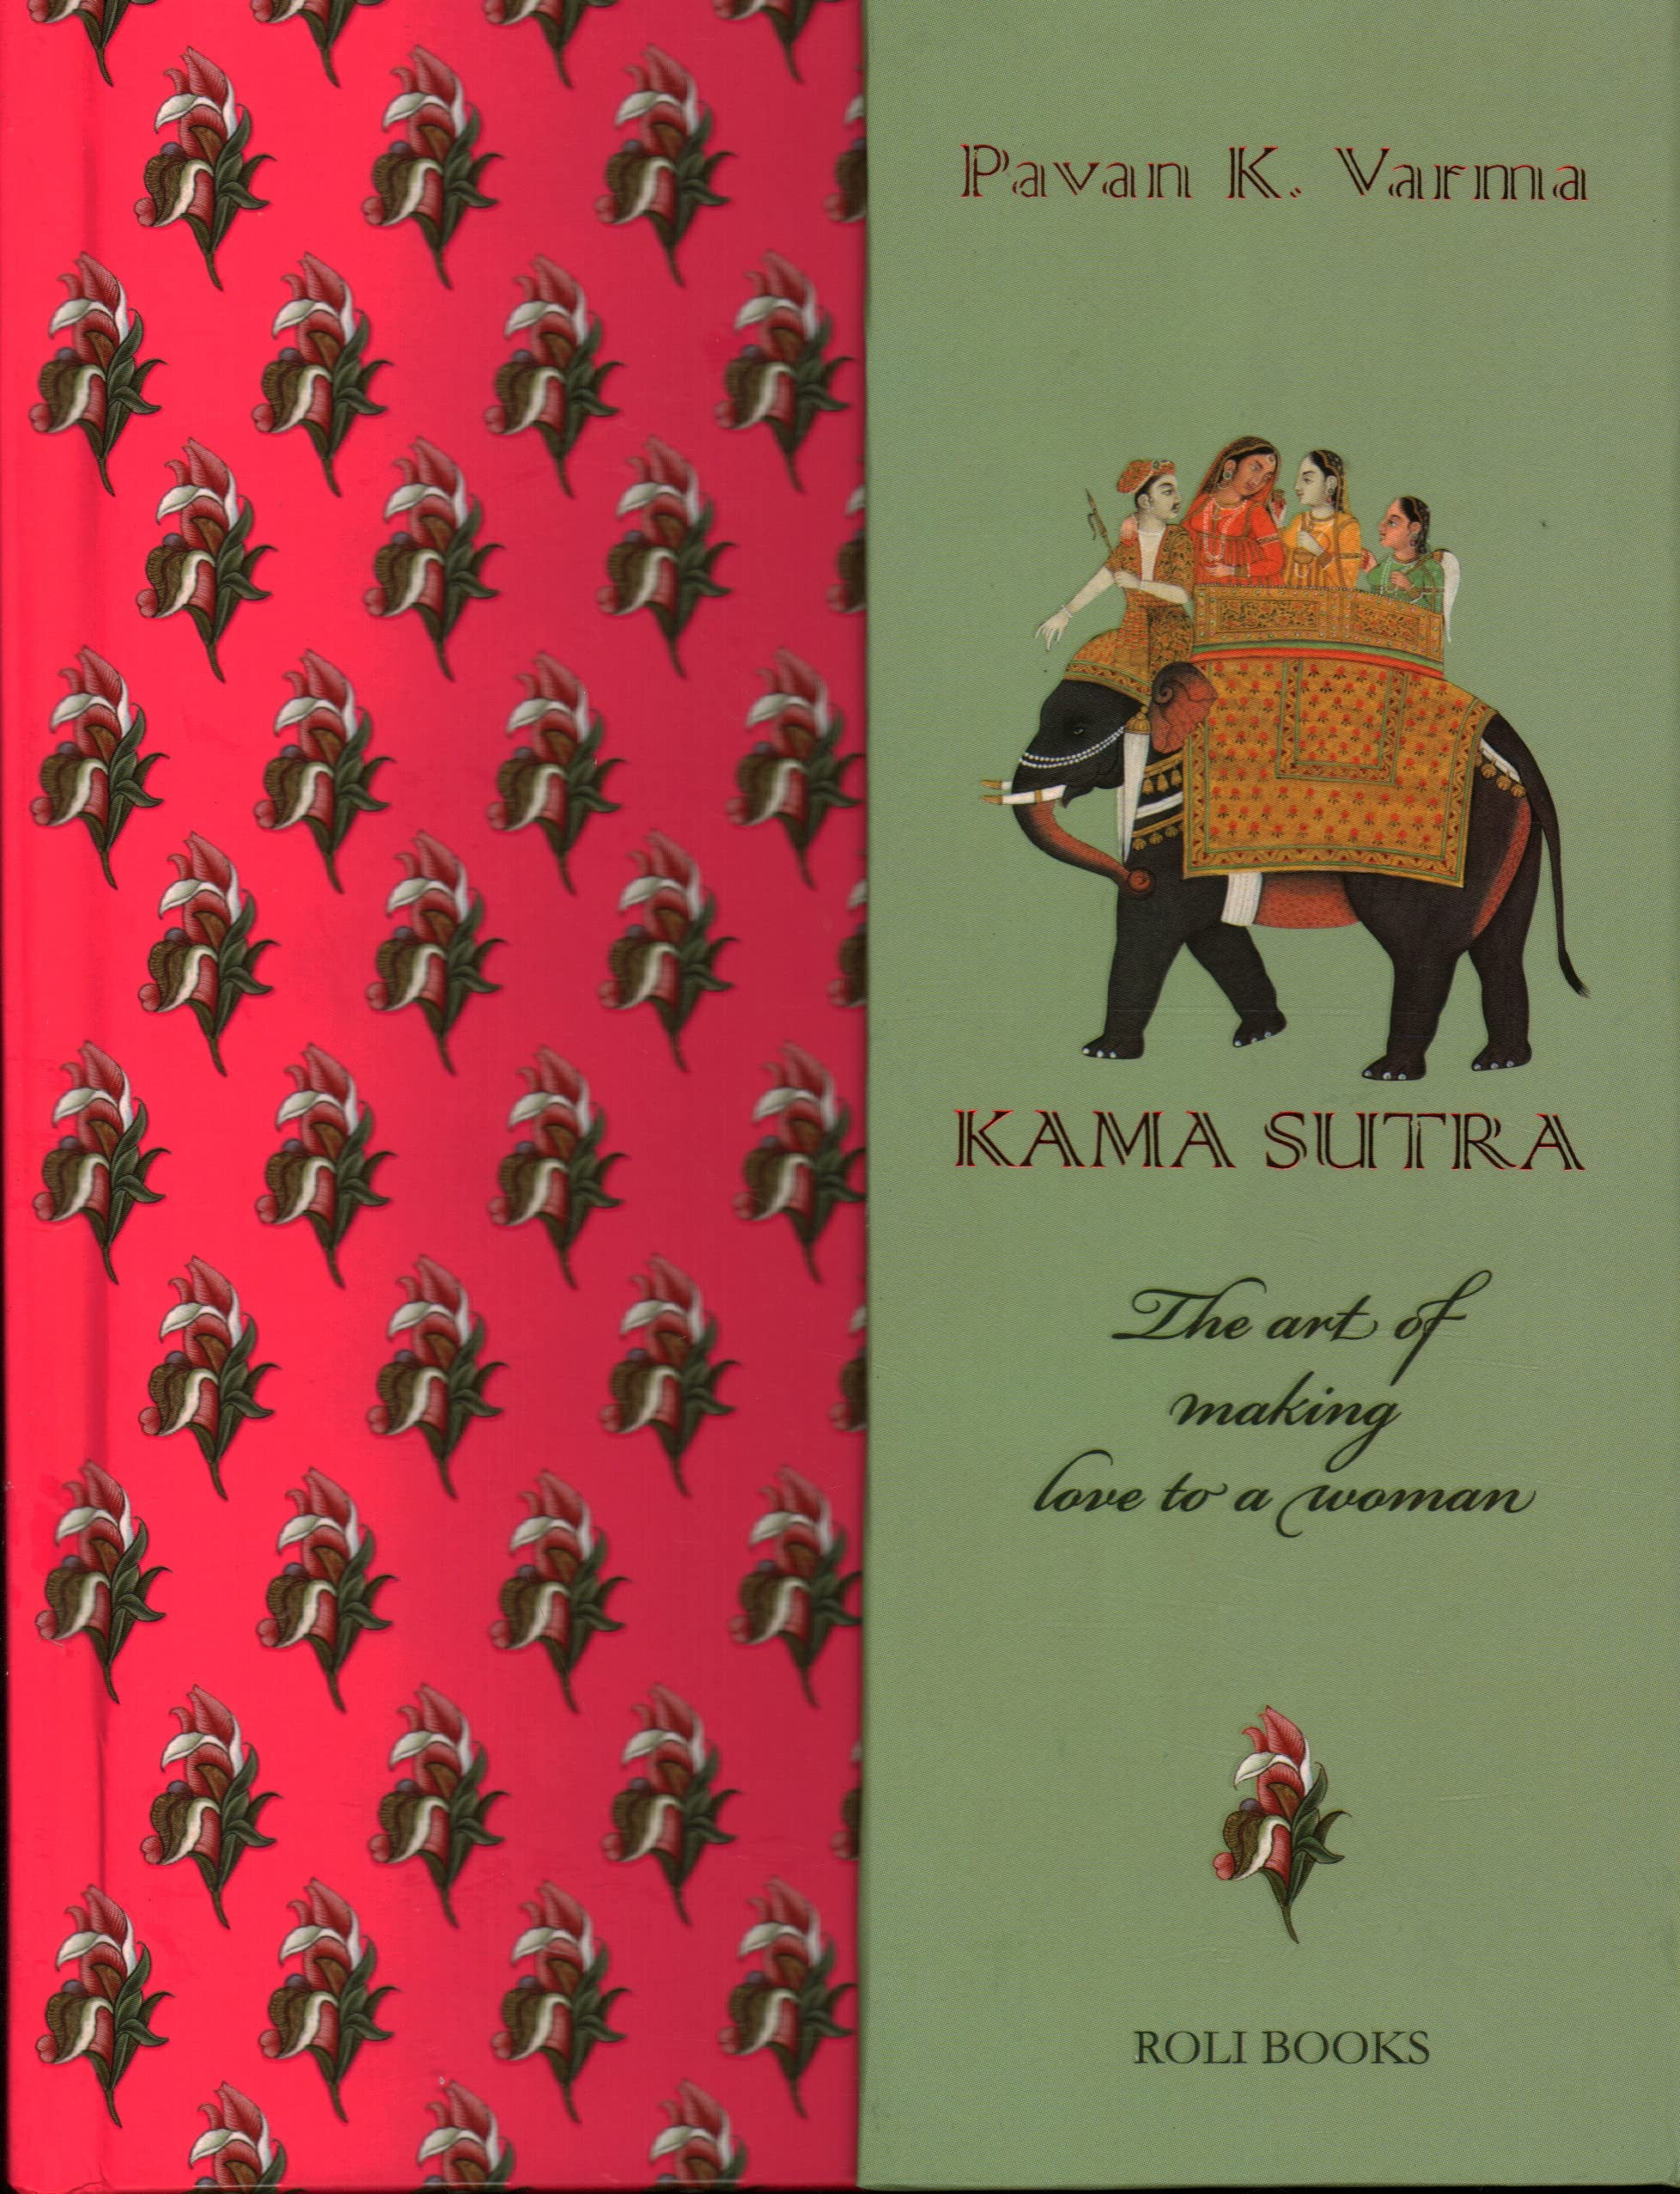 Kama Sutra | Pavan K. Varma image19